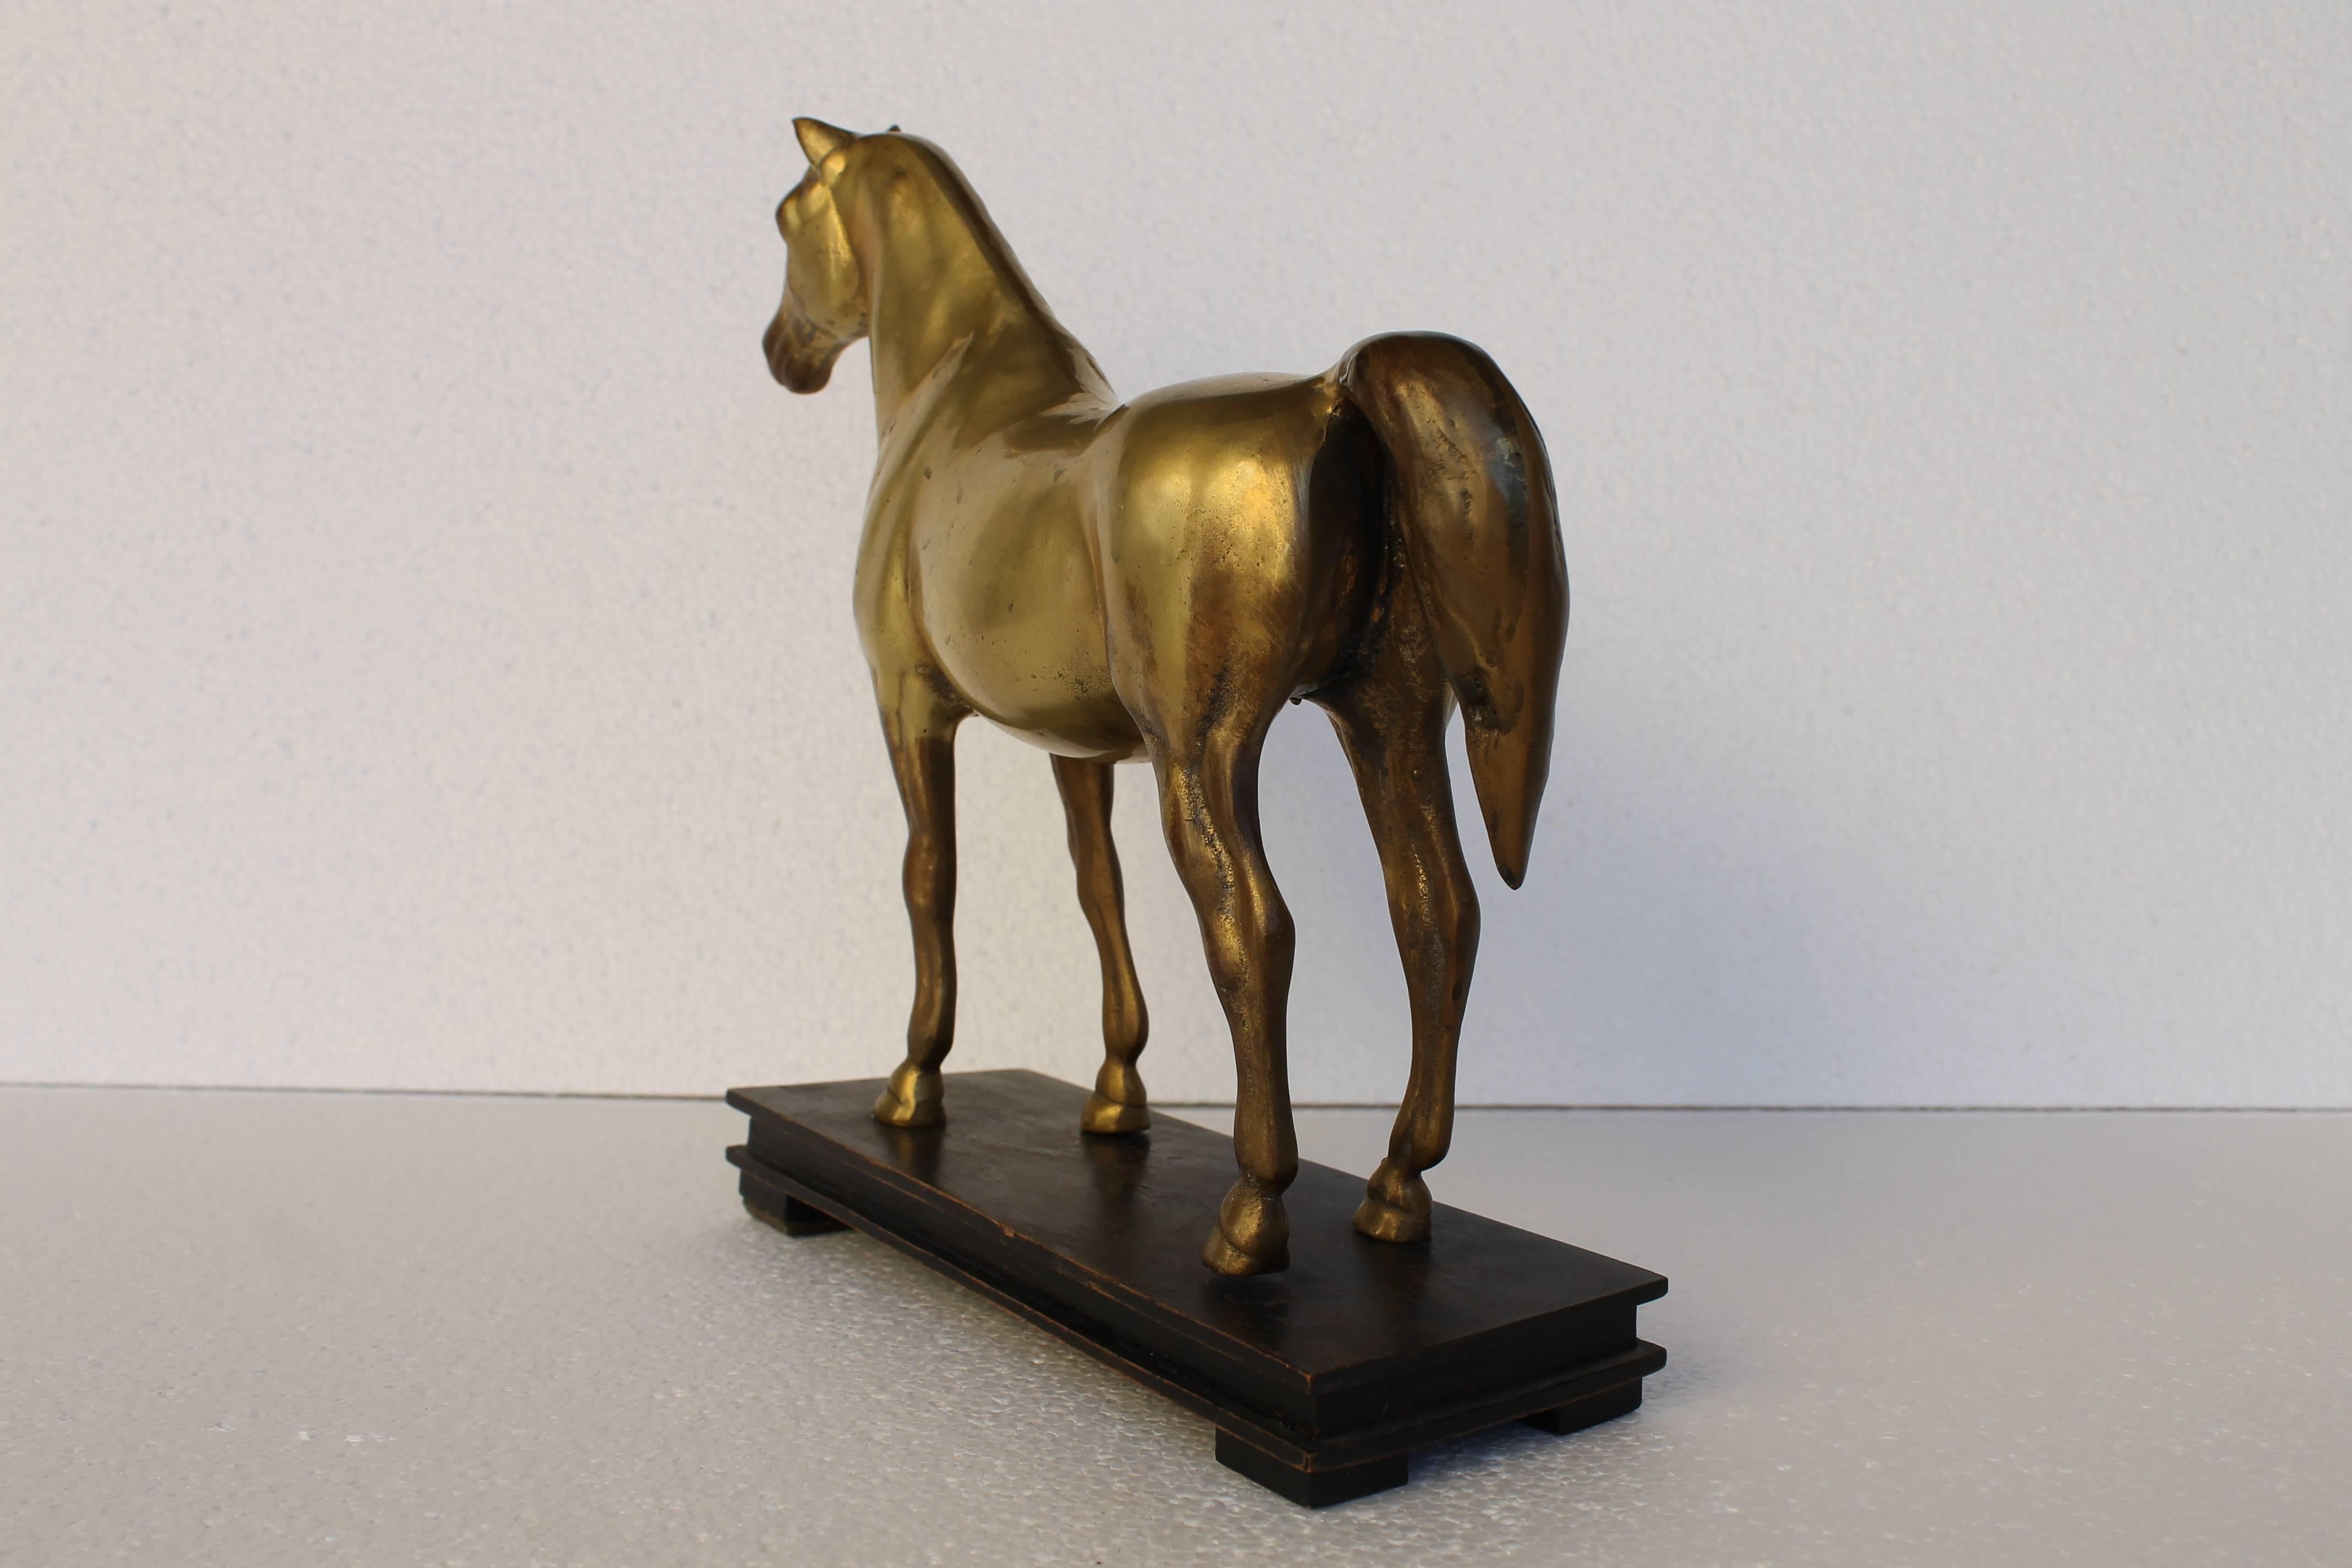 Brass and Wood Horse Model, 1940s (Mitte des 20. Jahrhunderts)